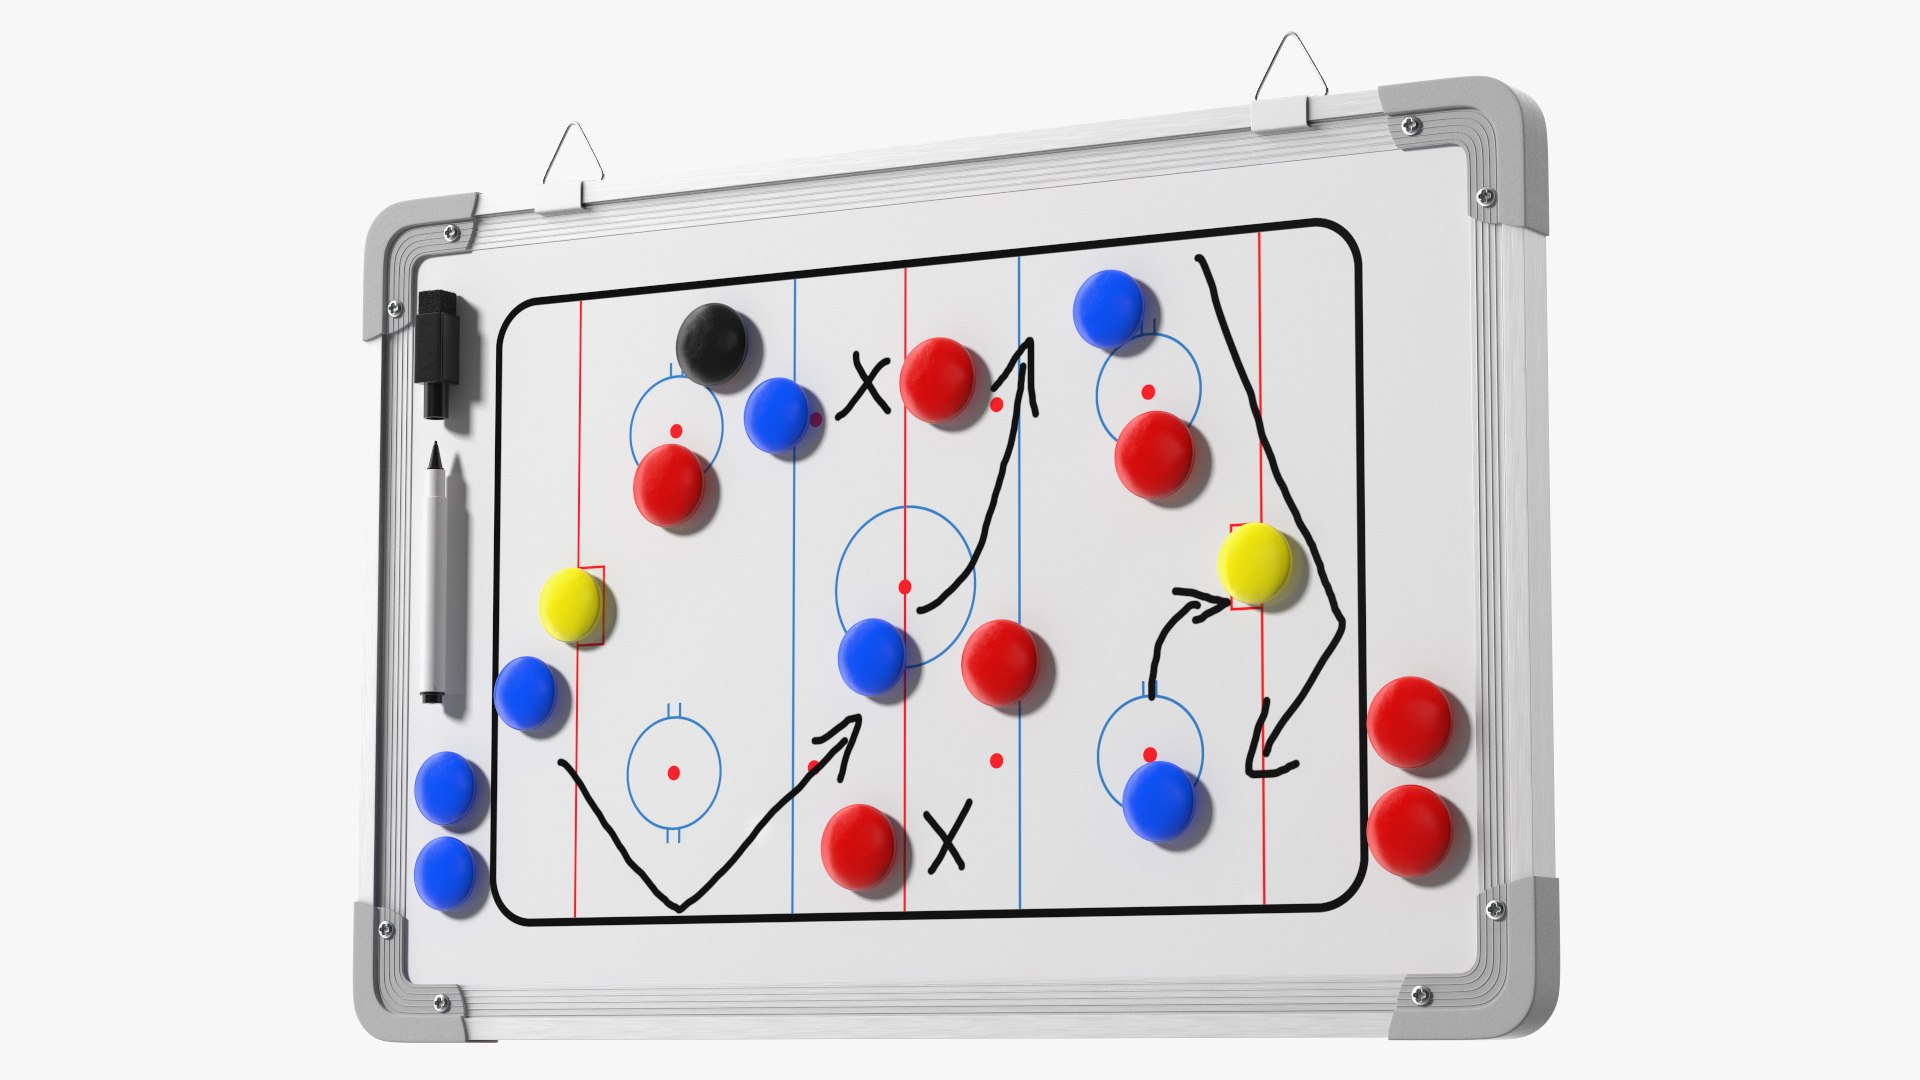 Hockeycoachingboardwithgamestrategyfurvray3dmodel001 